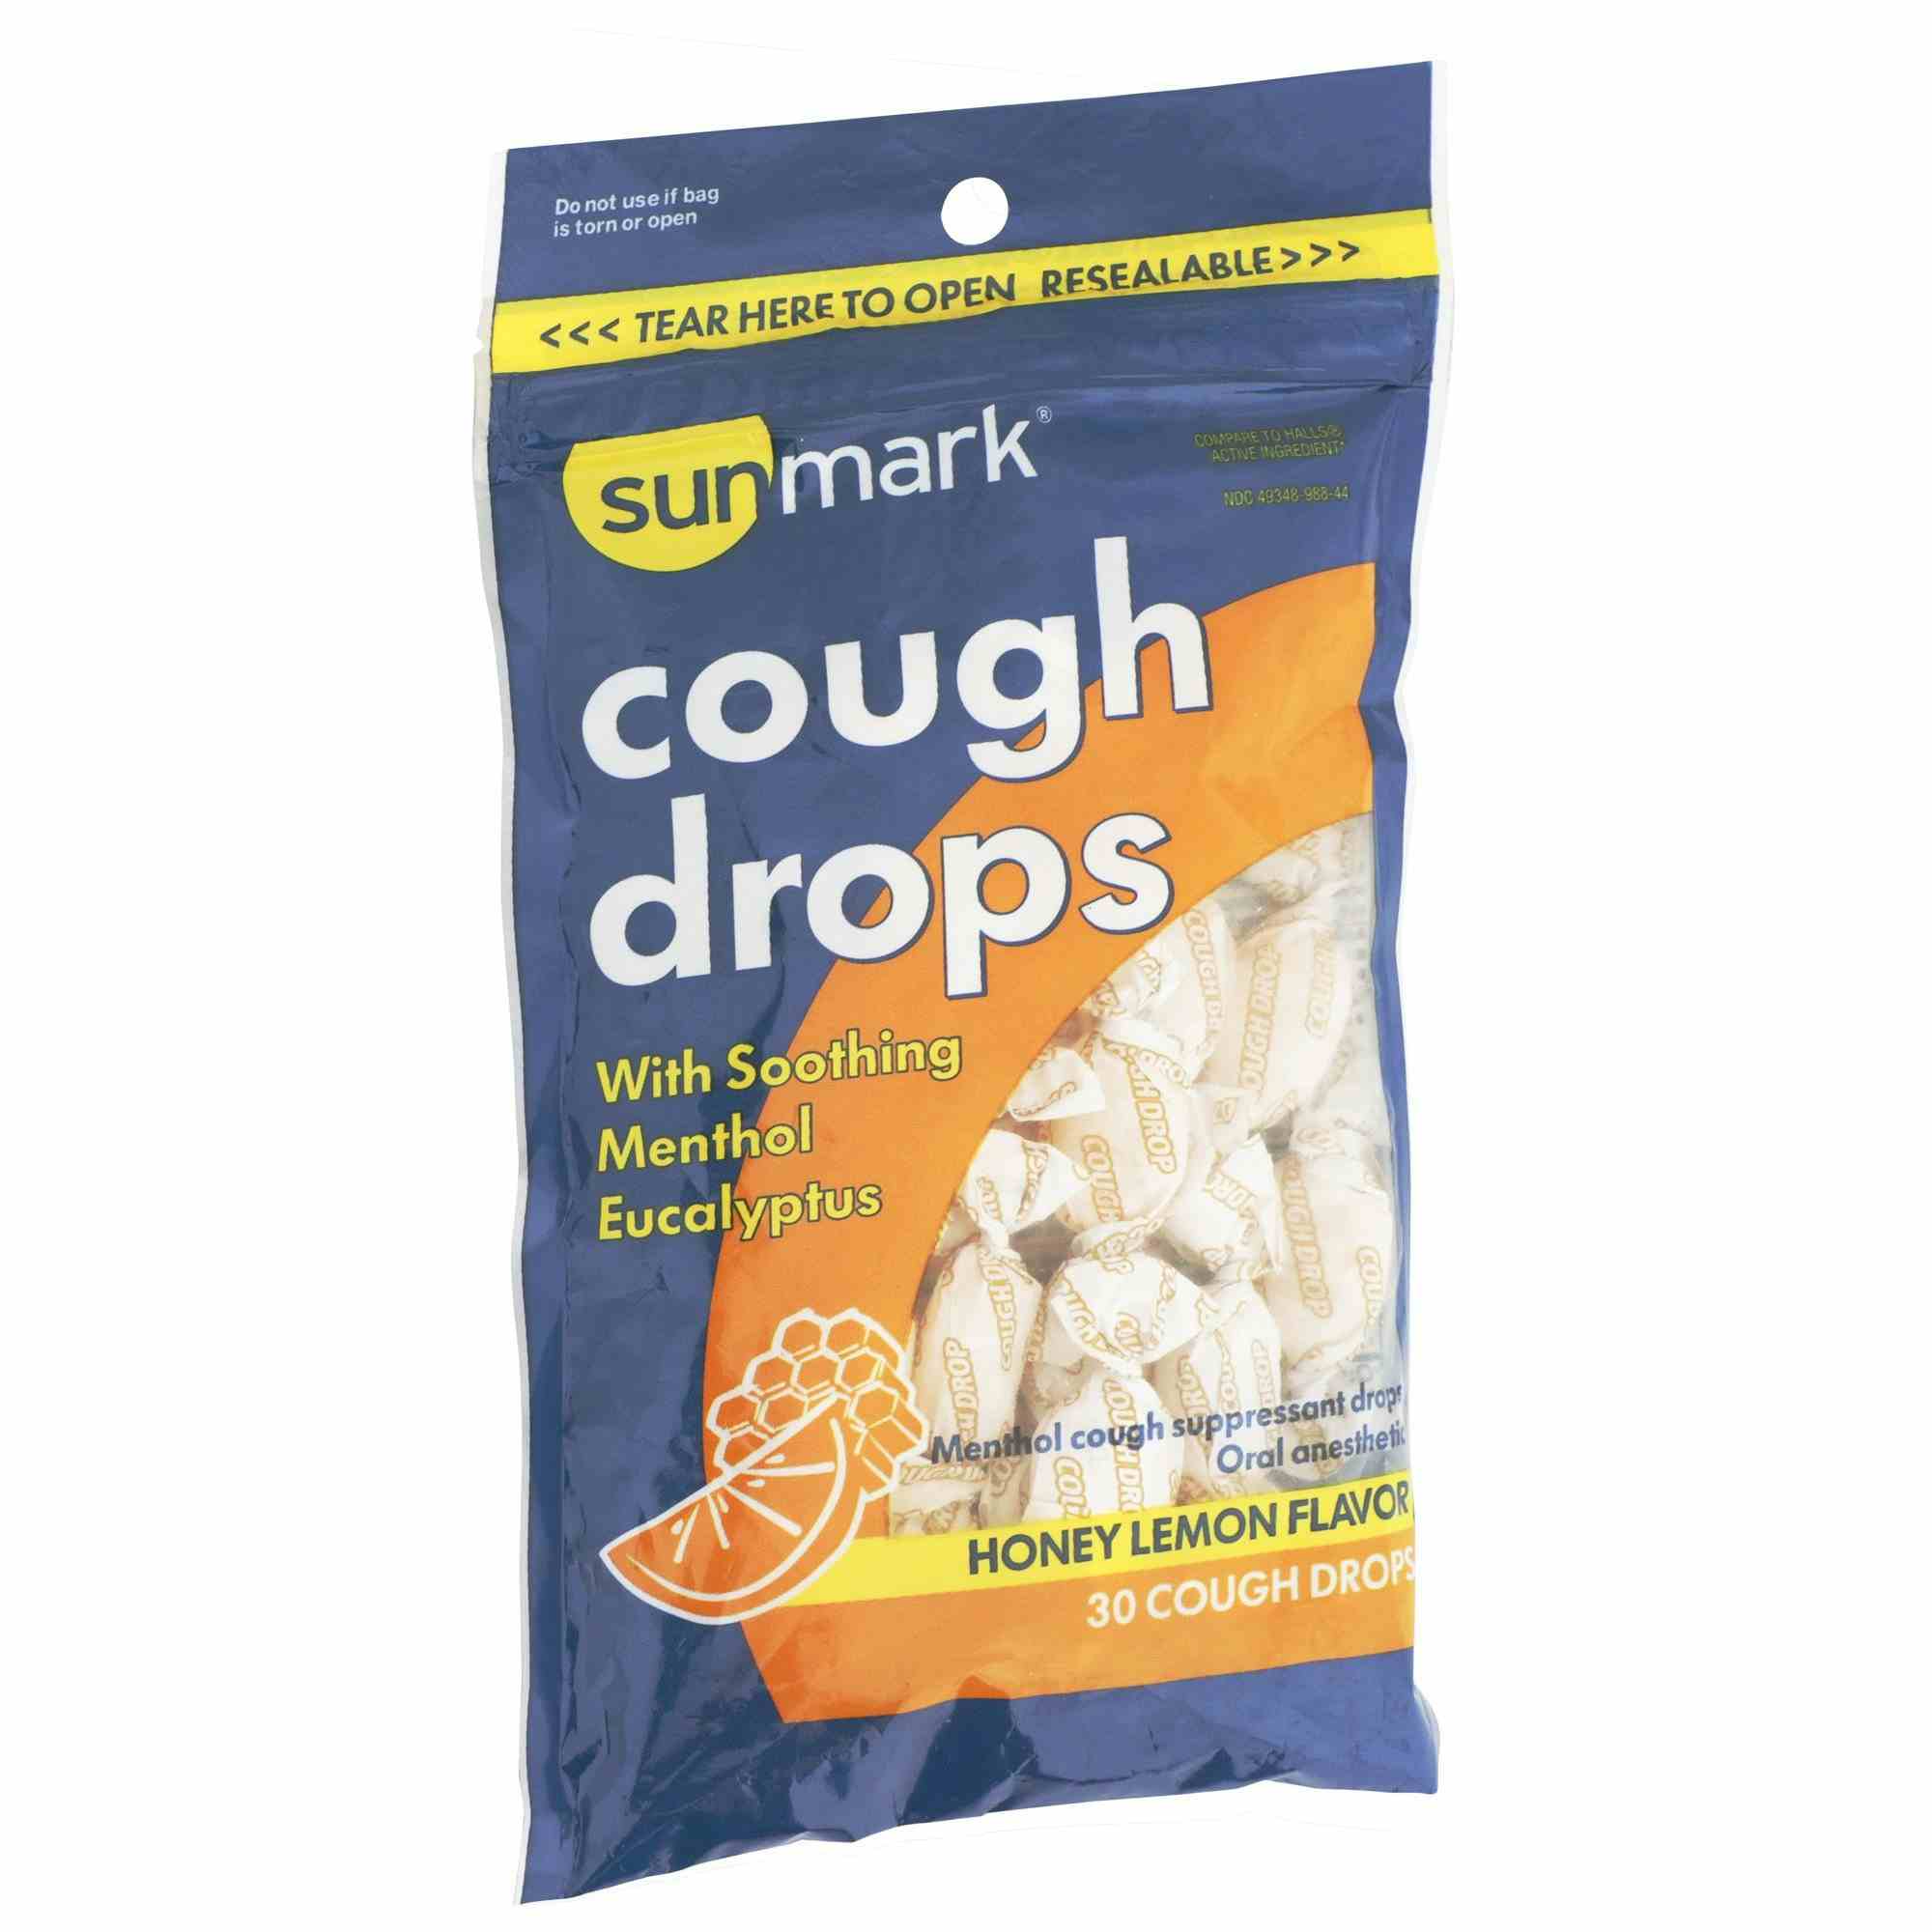 Sunmark Cough Drops with Soothing Menthol Eucalyptus, 49348098844, Honey Lemon - Bag of 30